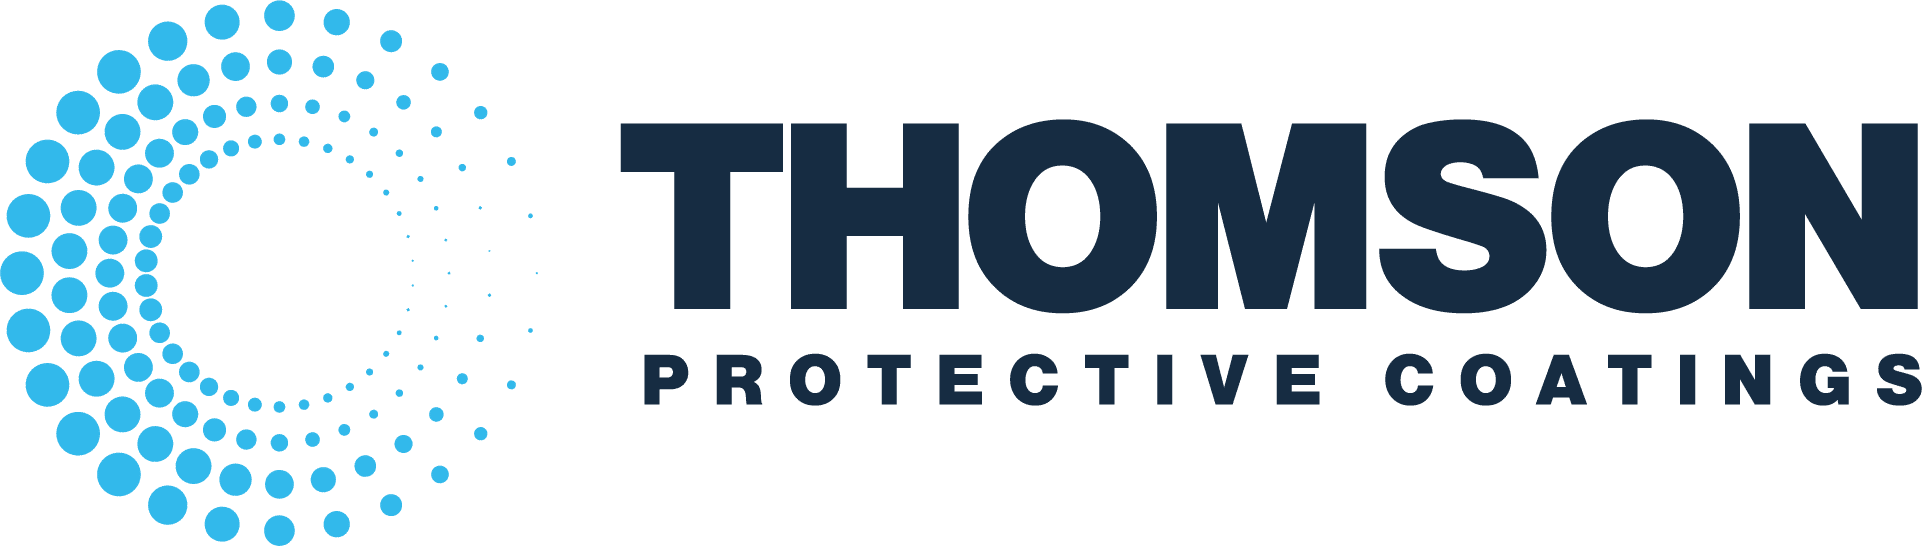 Thomson Protective Coatings